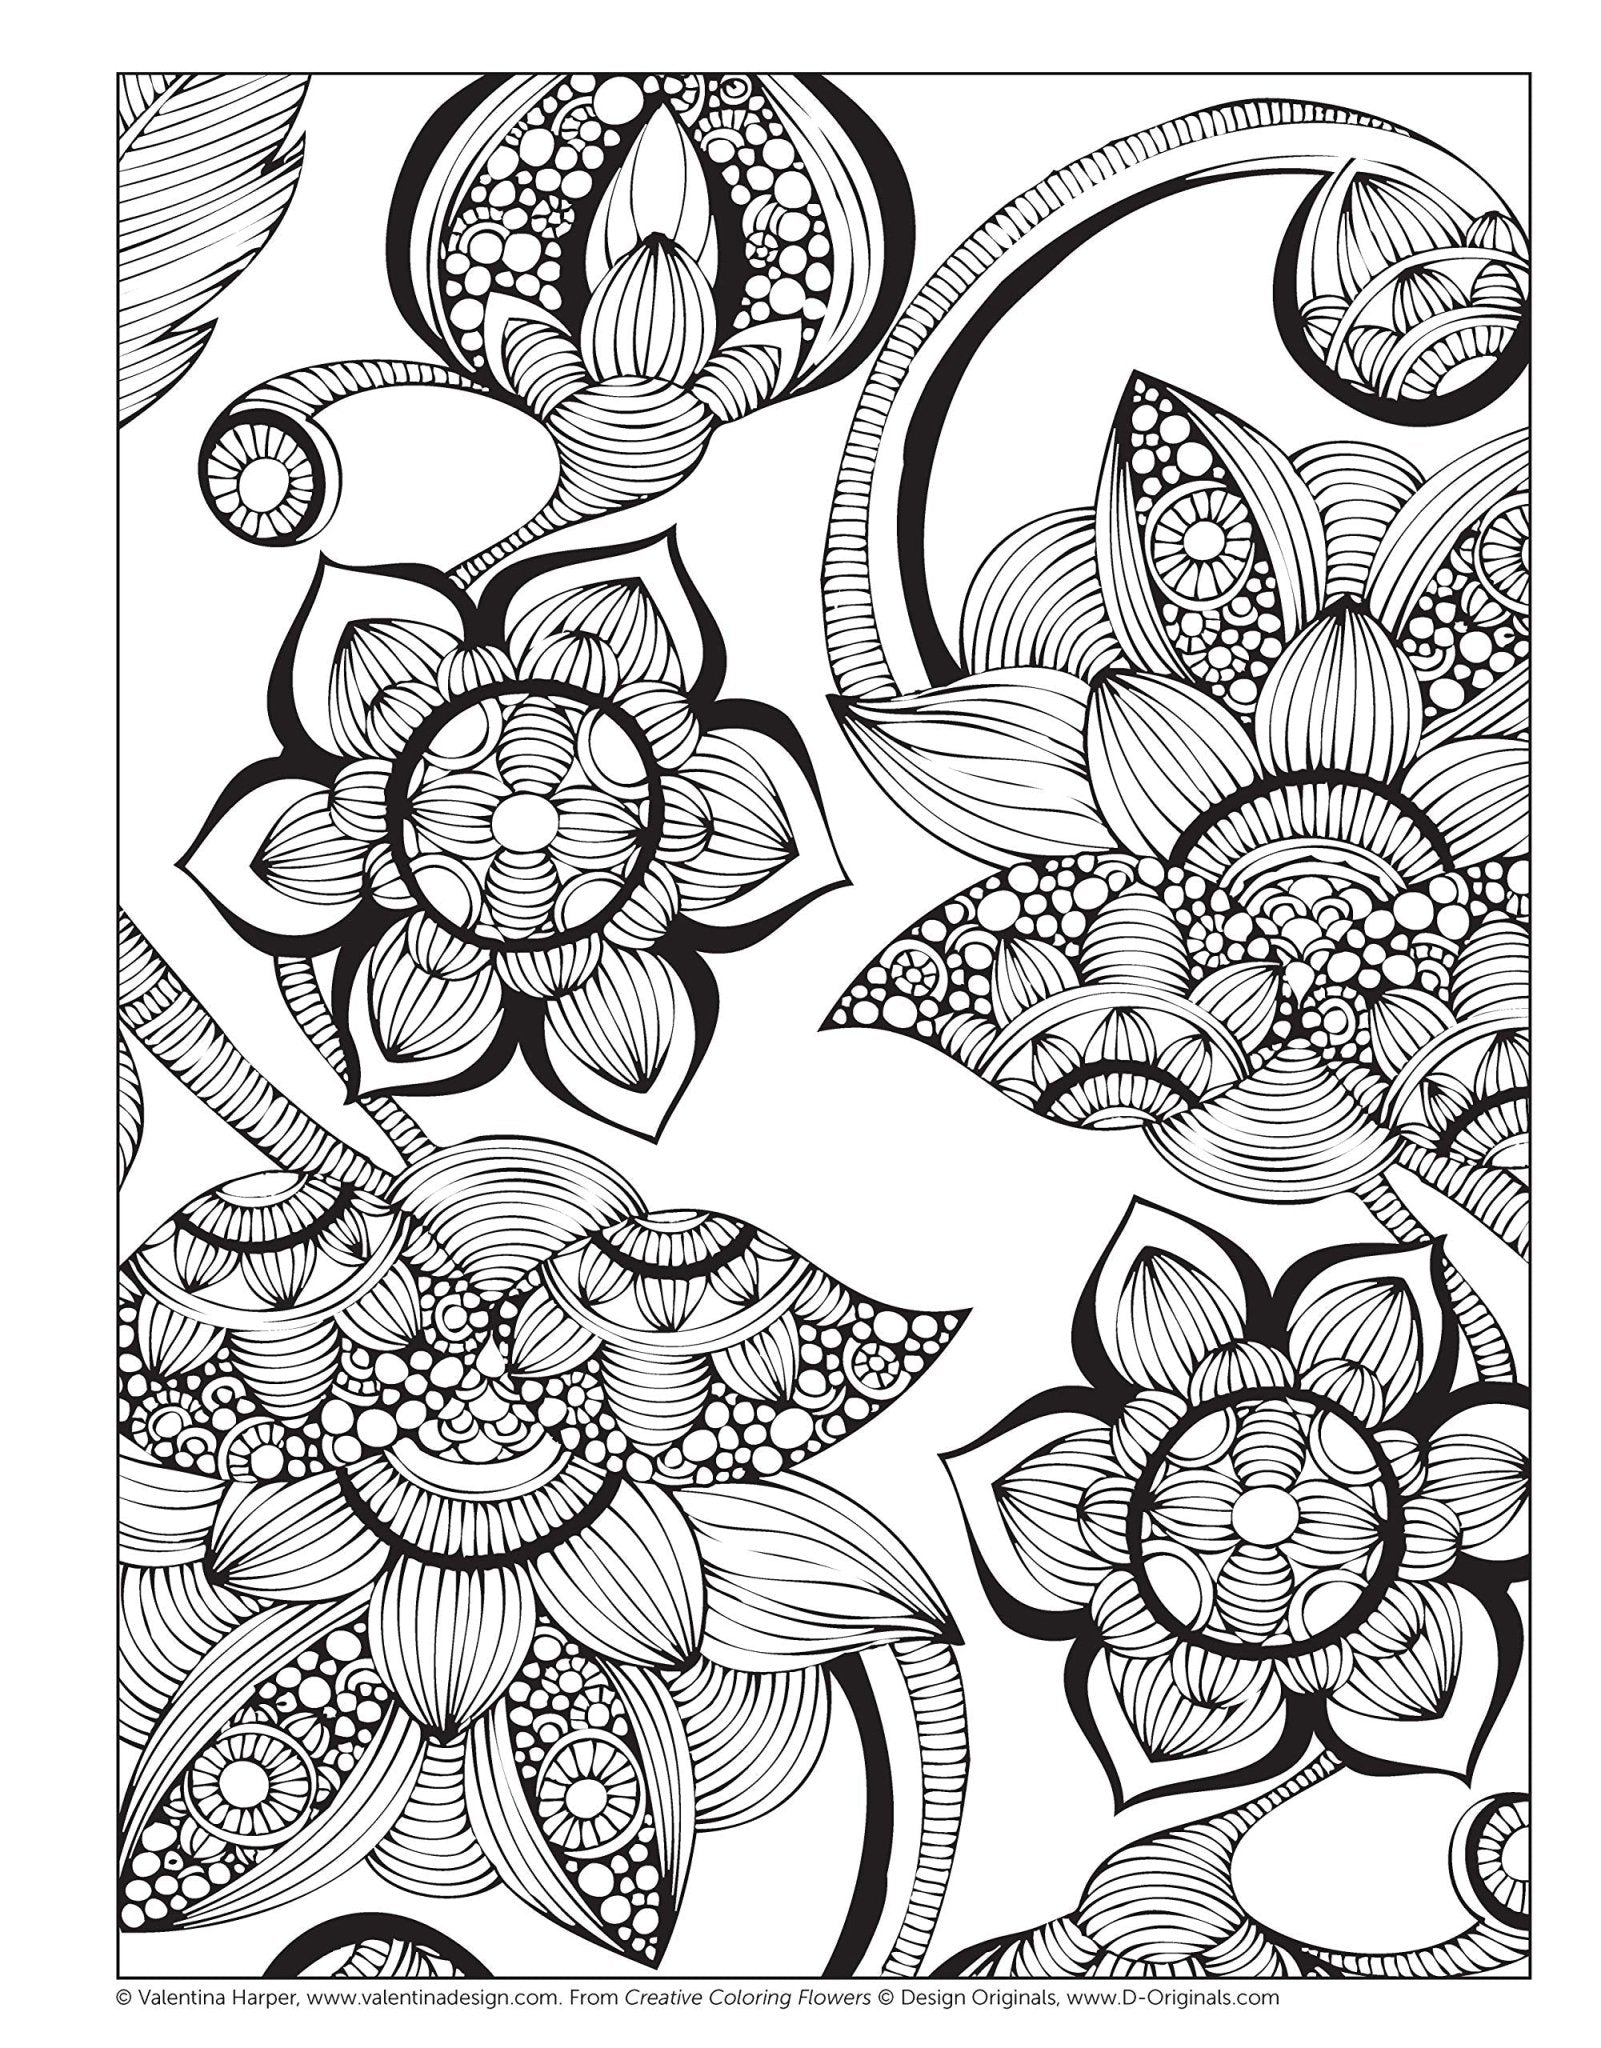 Design Originals Colouring Book - Creative Coloring Flowers - Crafty Divas